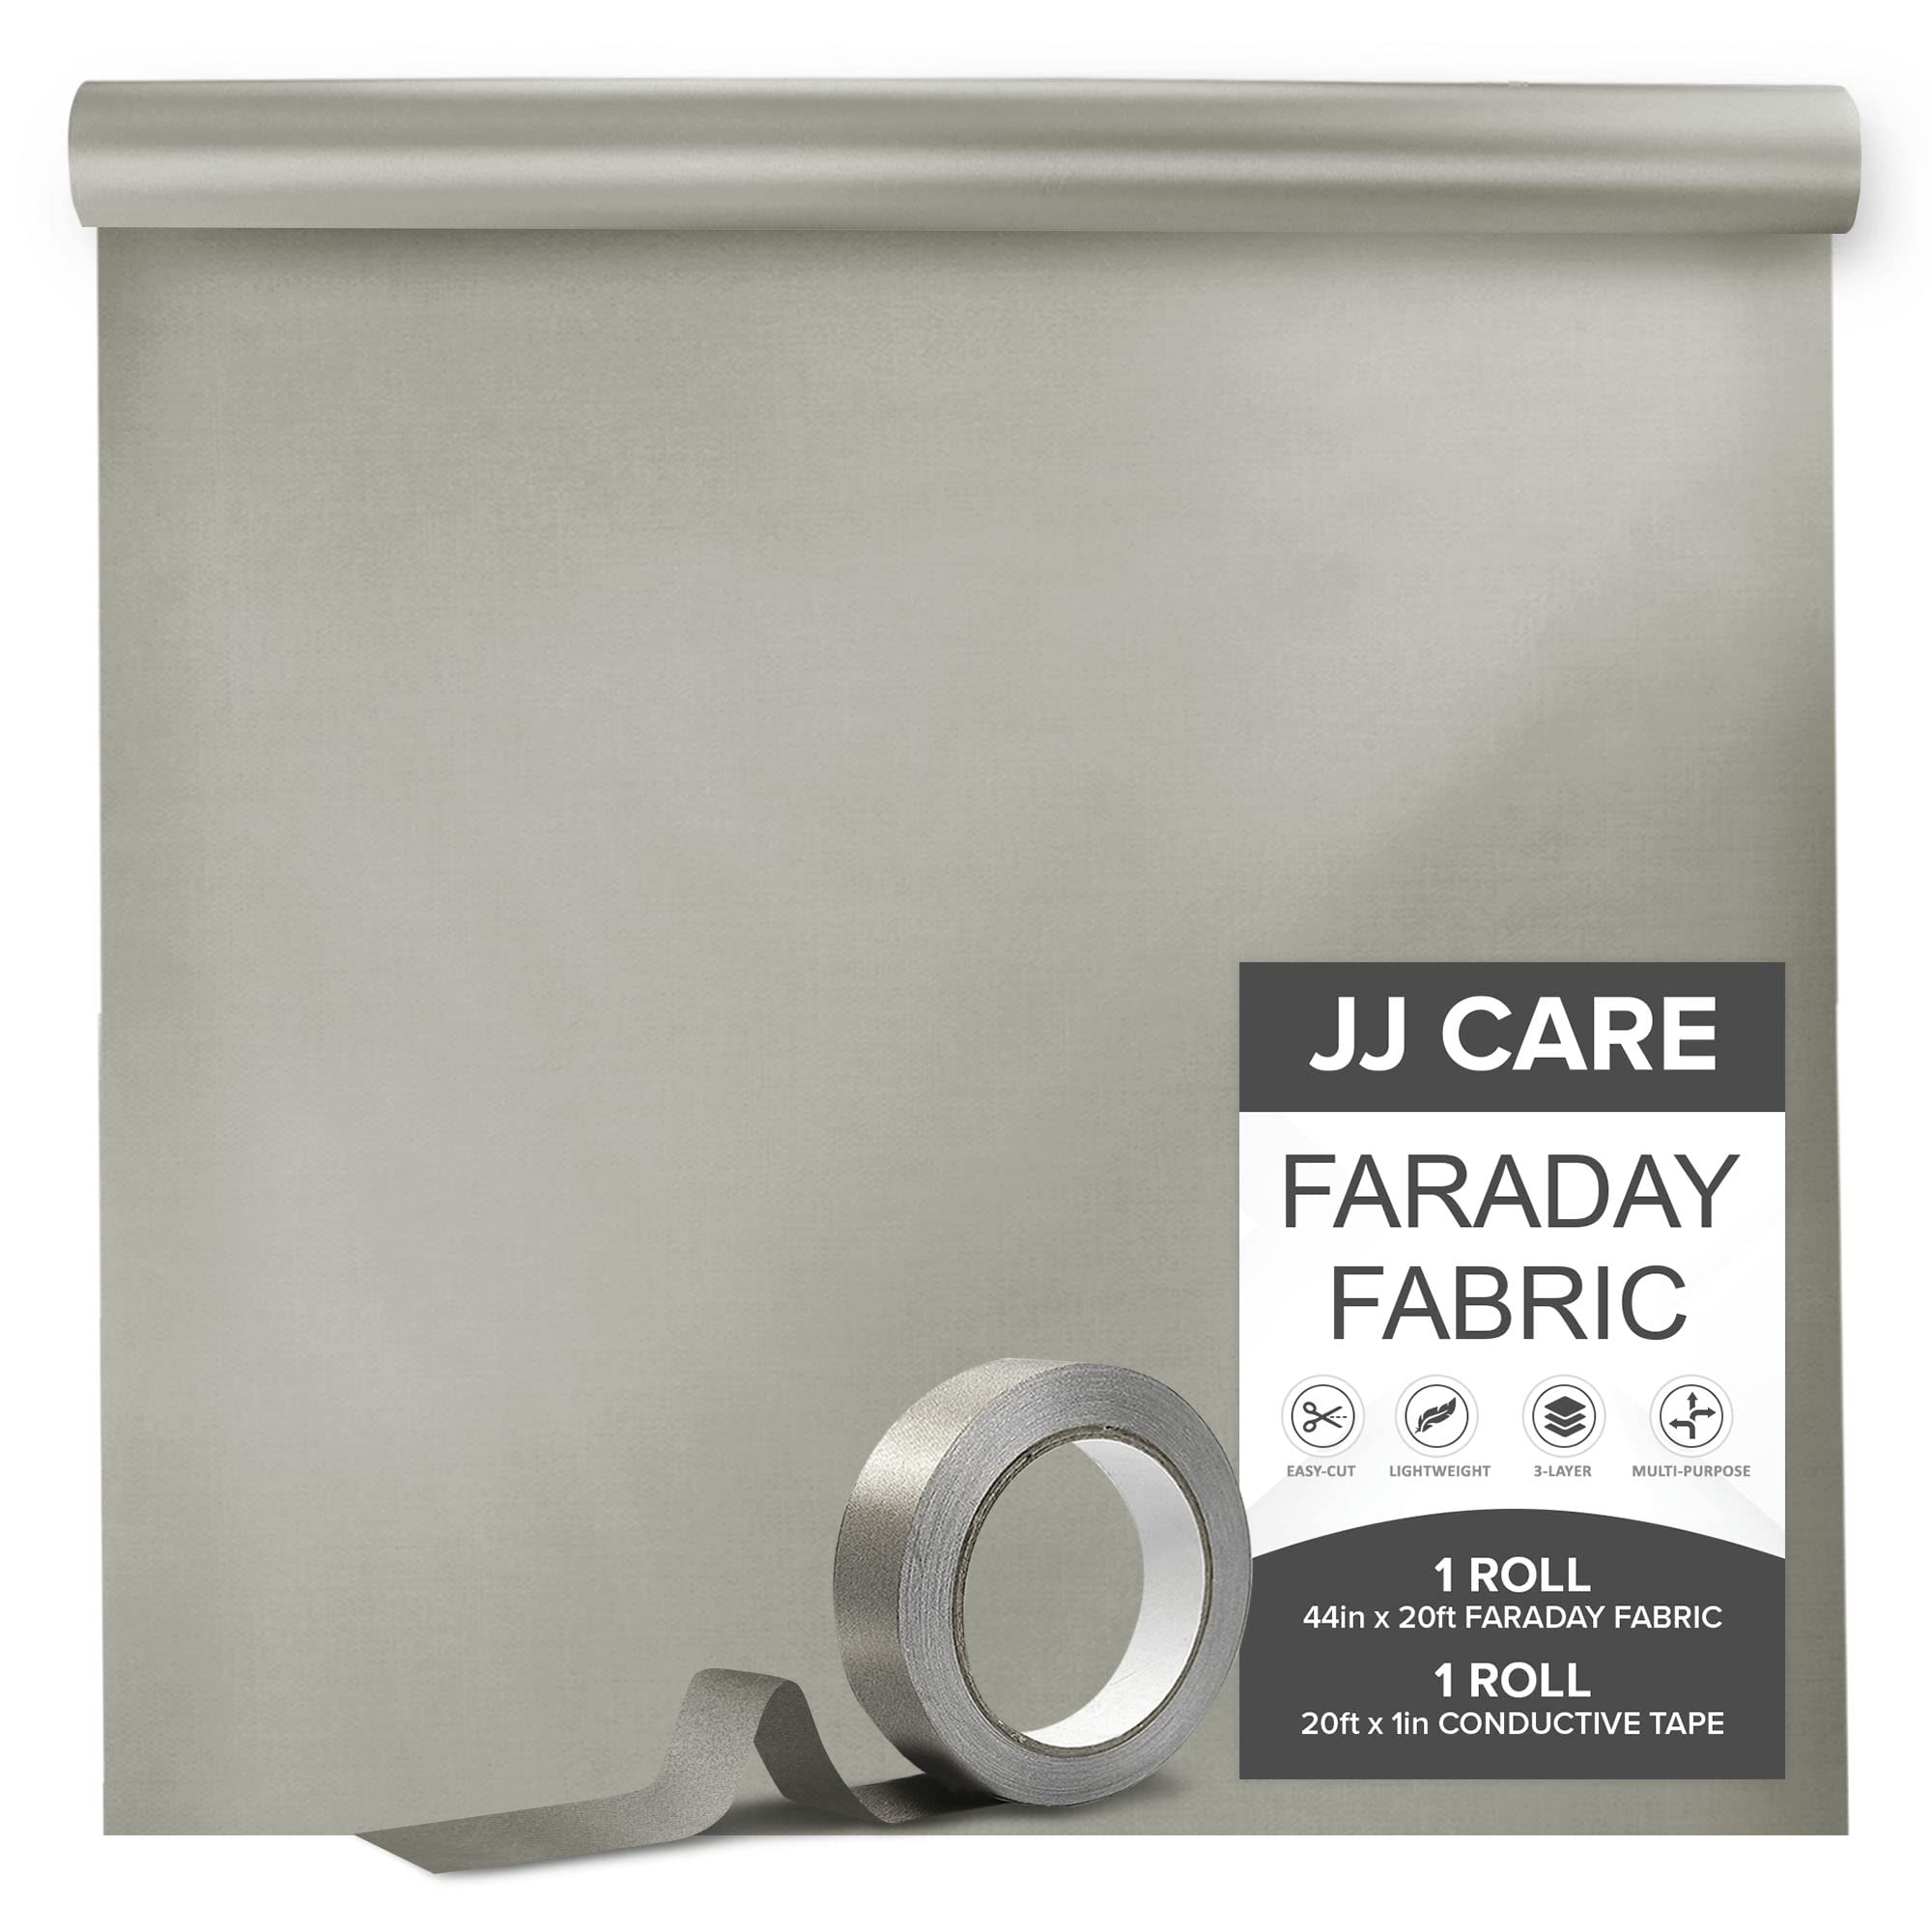 JJ CARE Faraday Fabric (44 x 20 ft. Faraday Cloth + 6.6 Yards